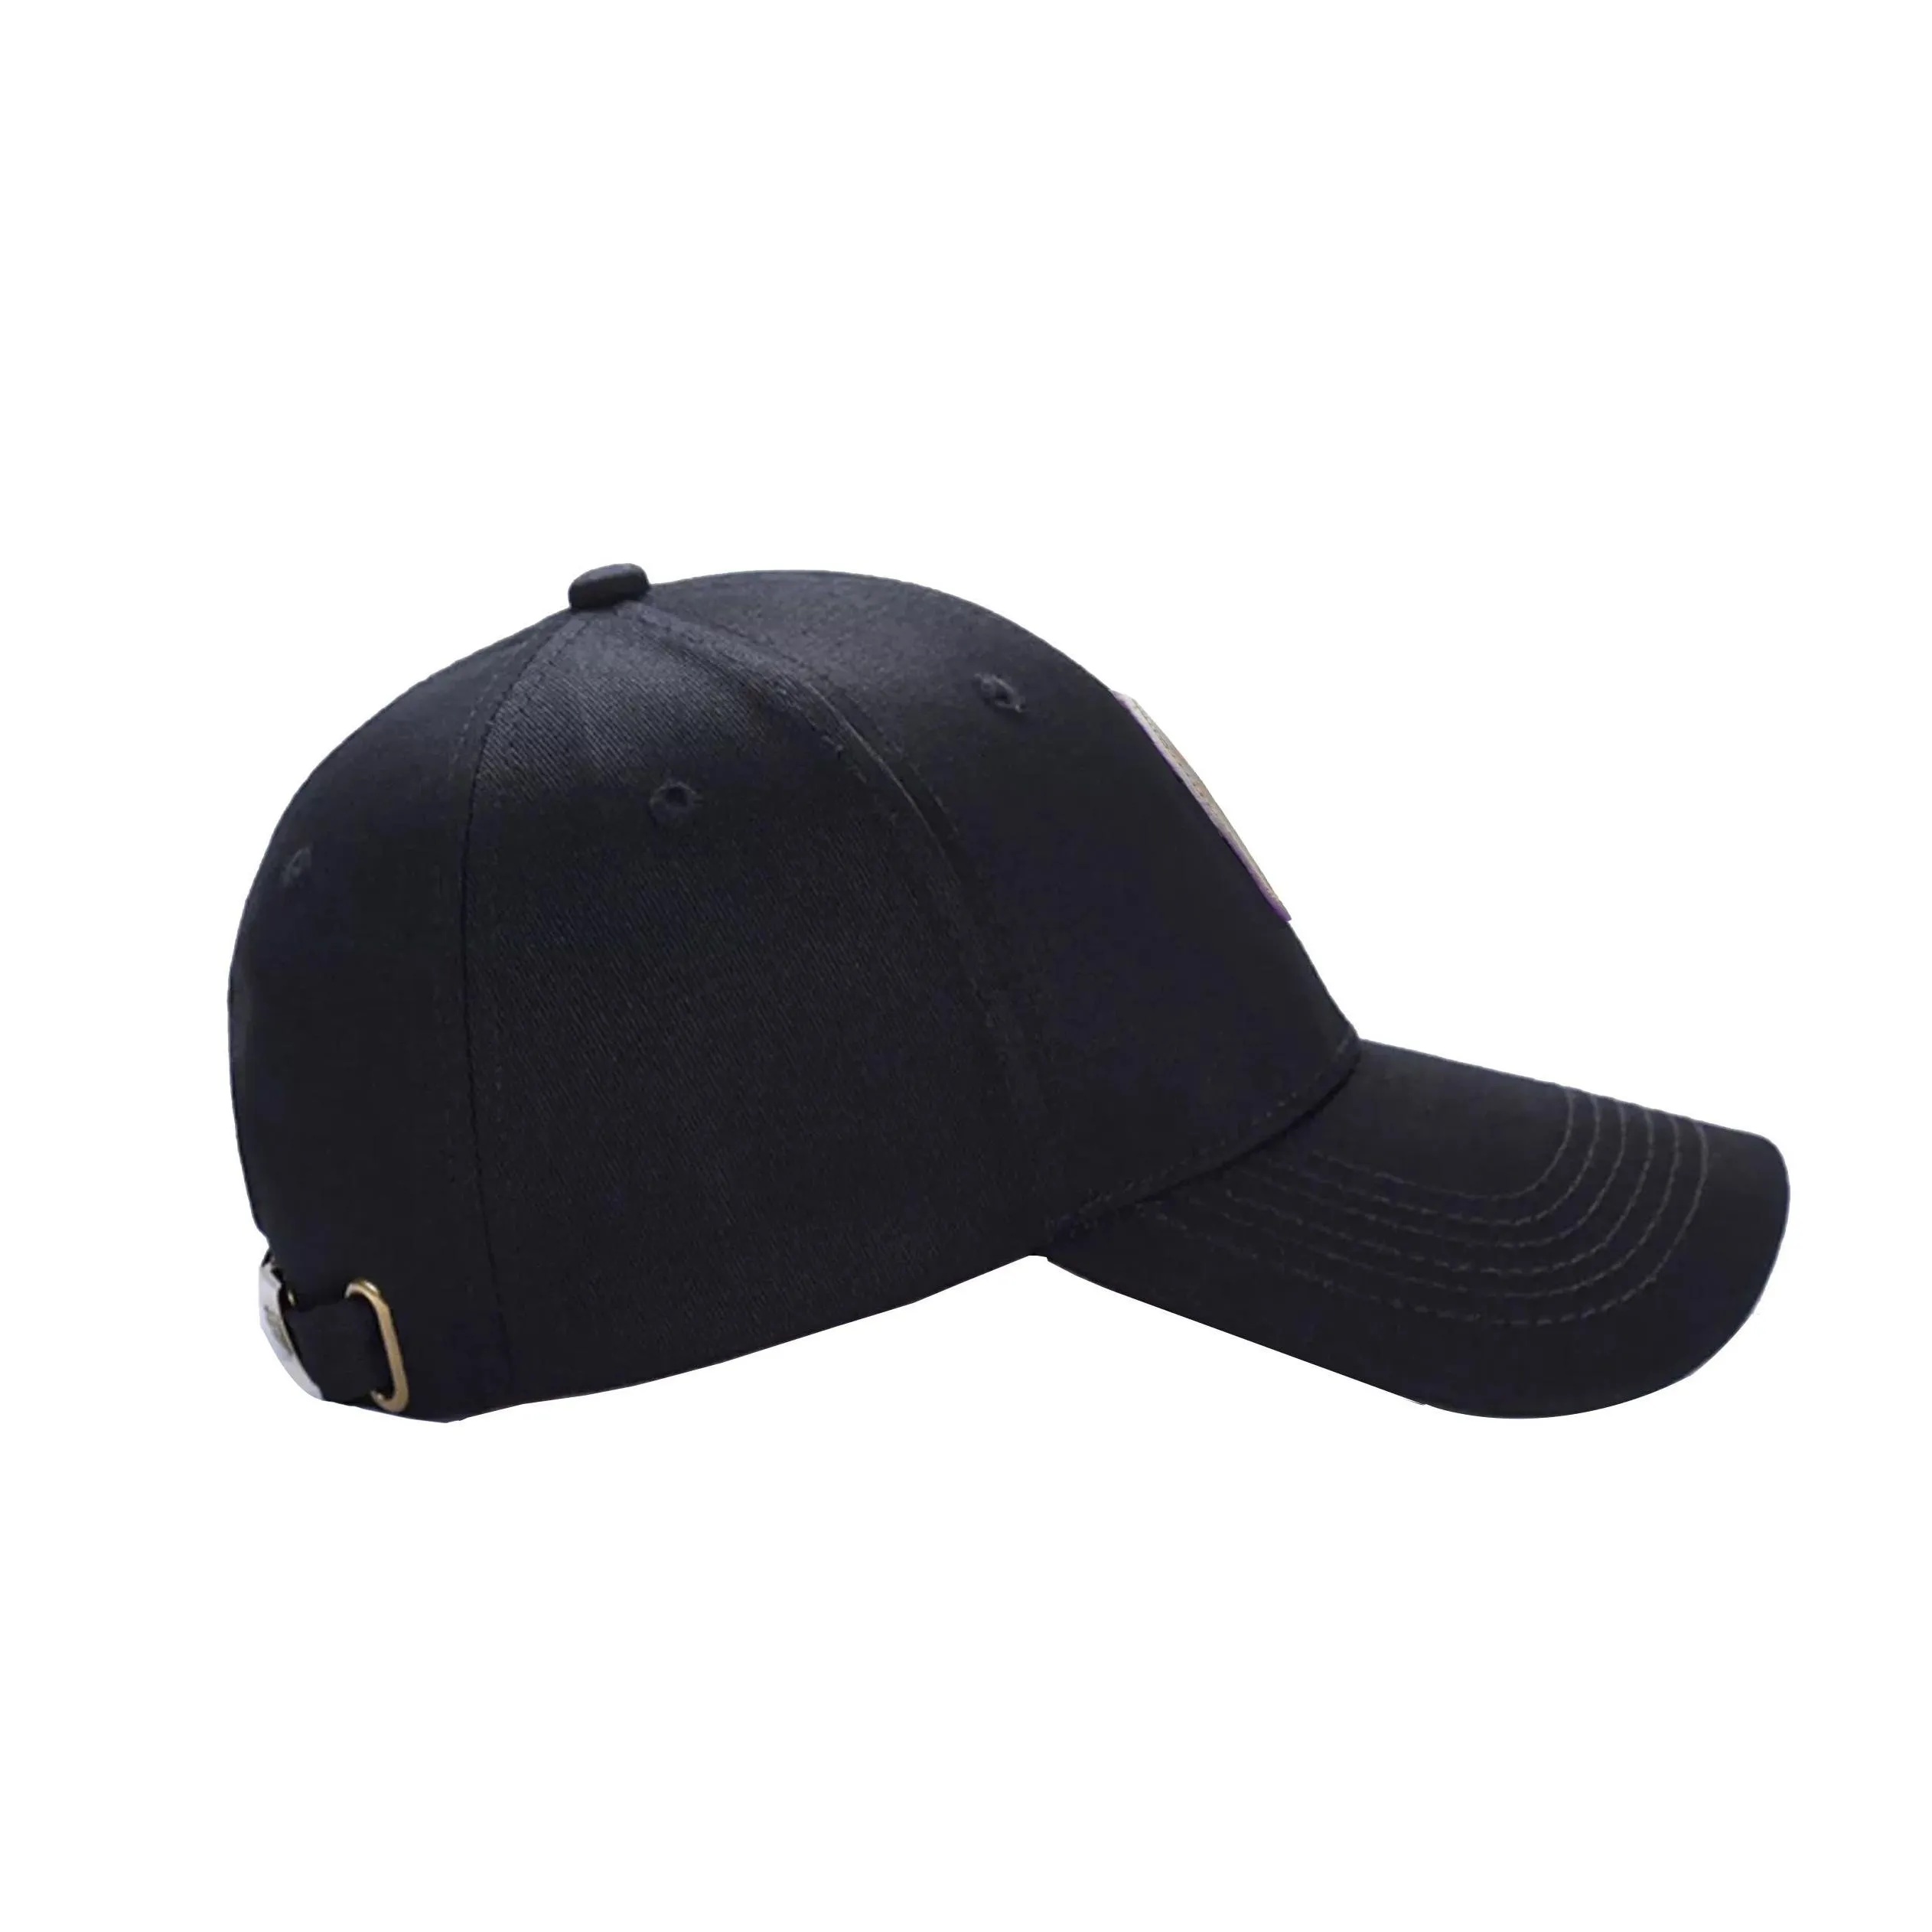 Golden State Baseball Cap Unisex Adjustable Snapback Lightweight Versatile Classic Basketball Club Fans Hat